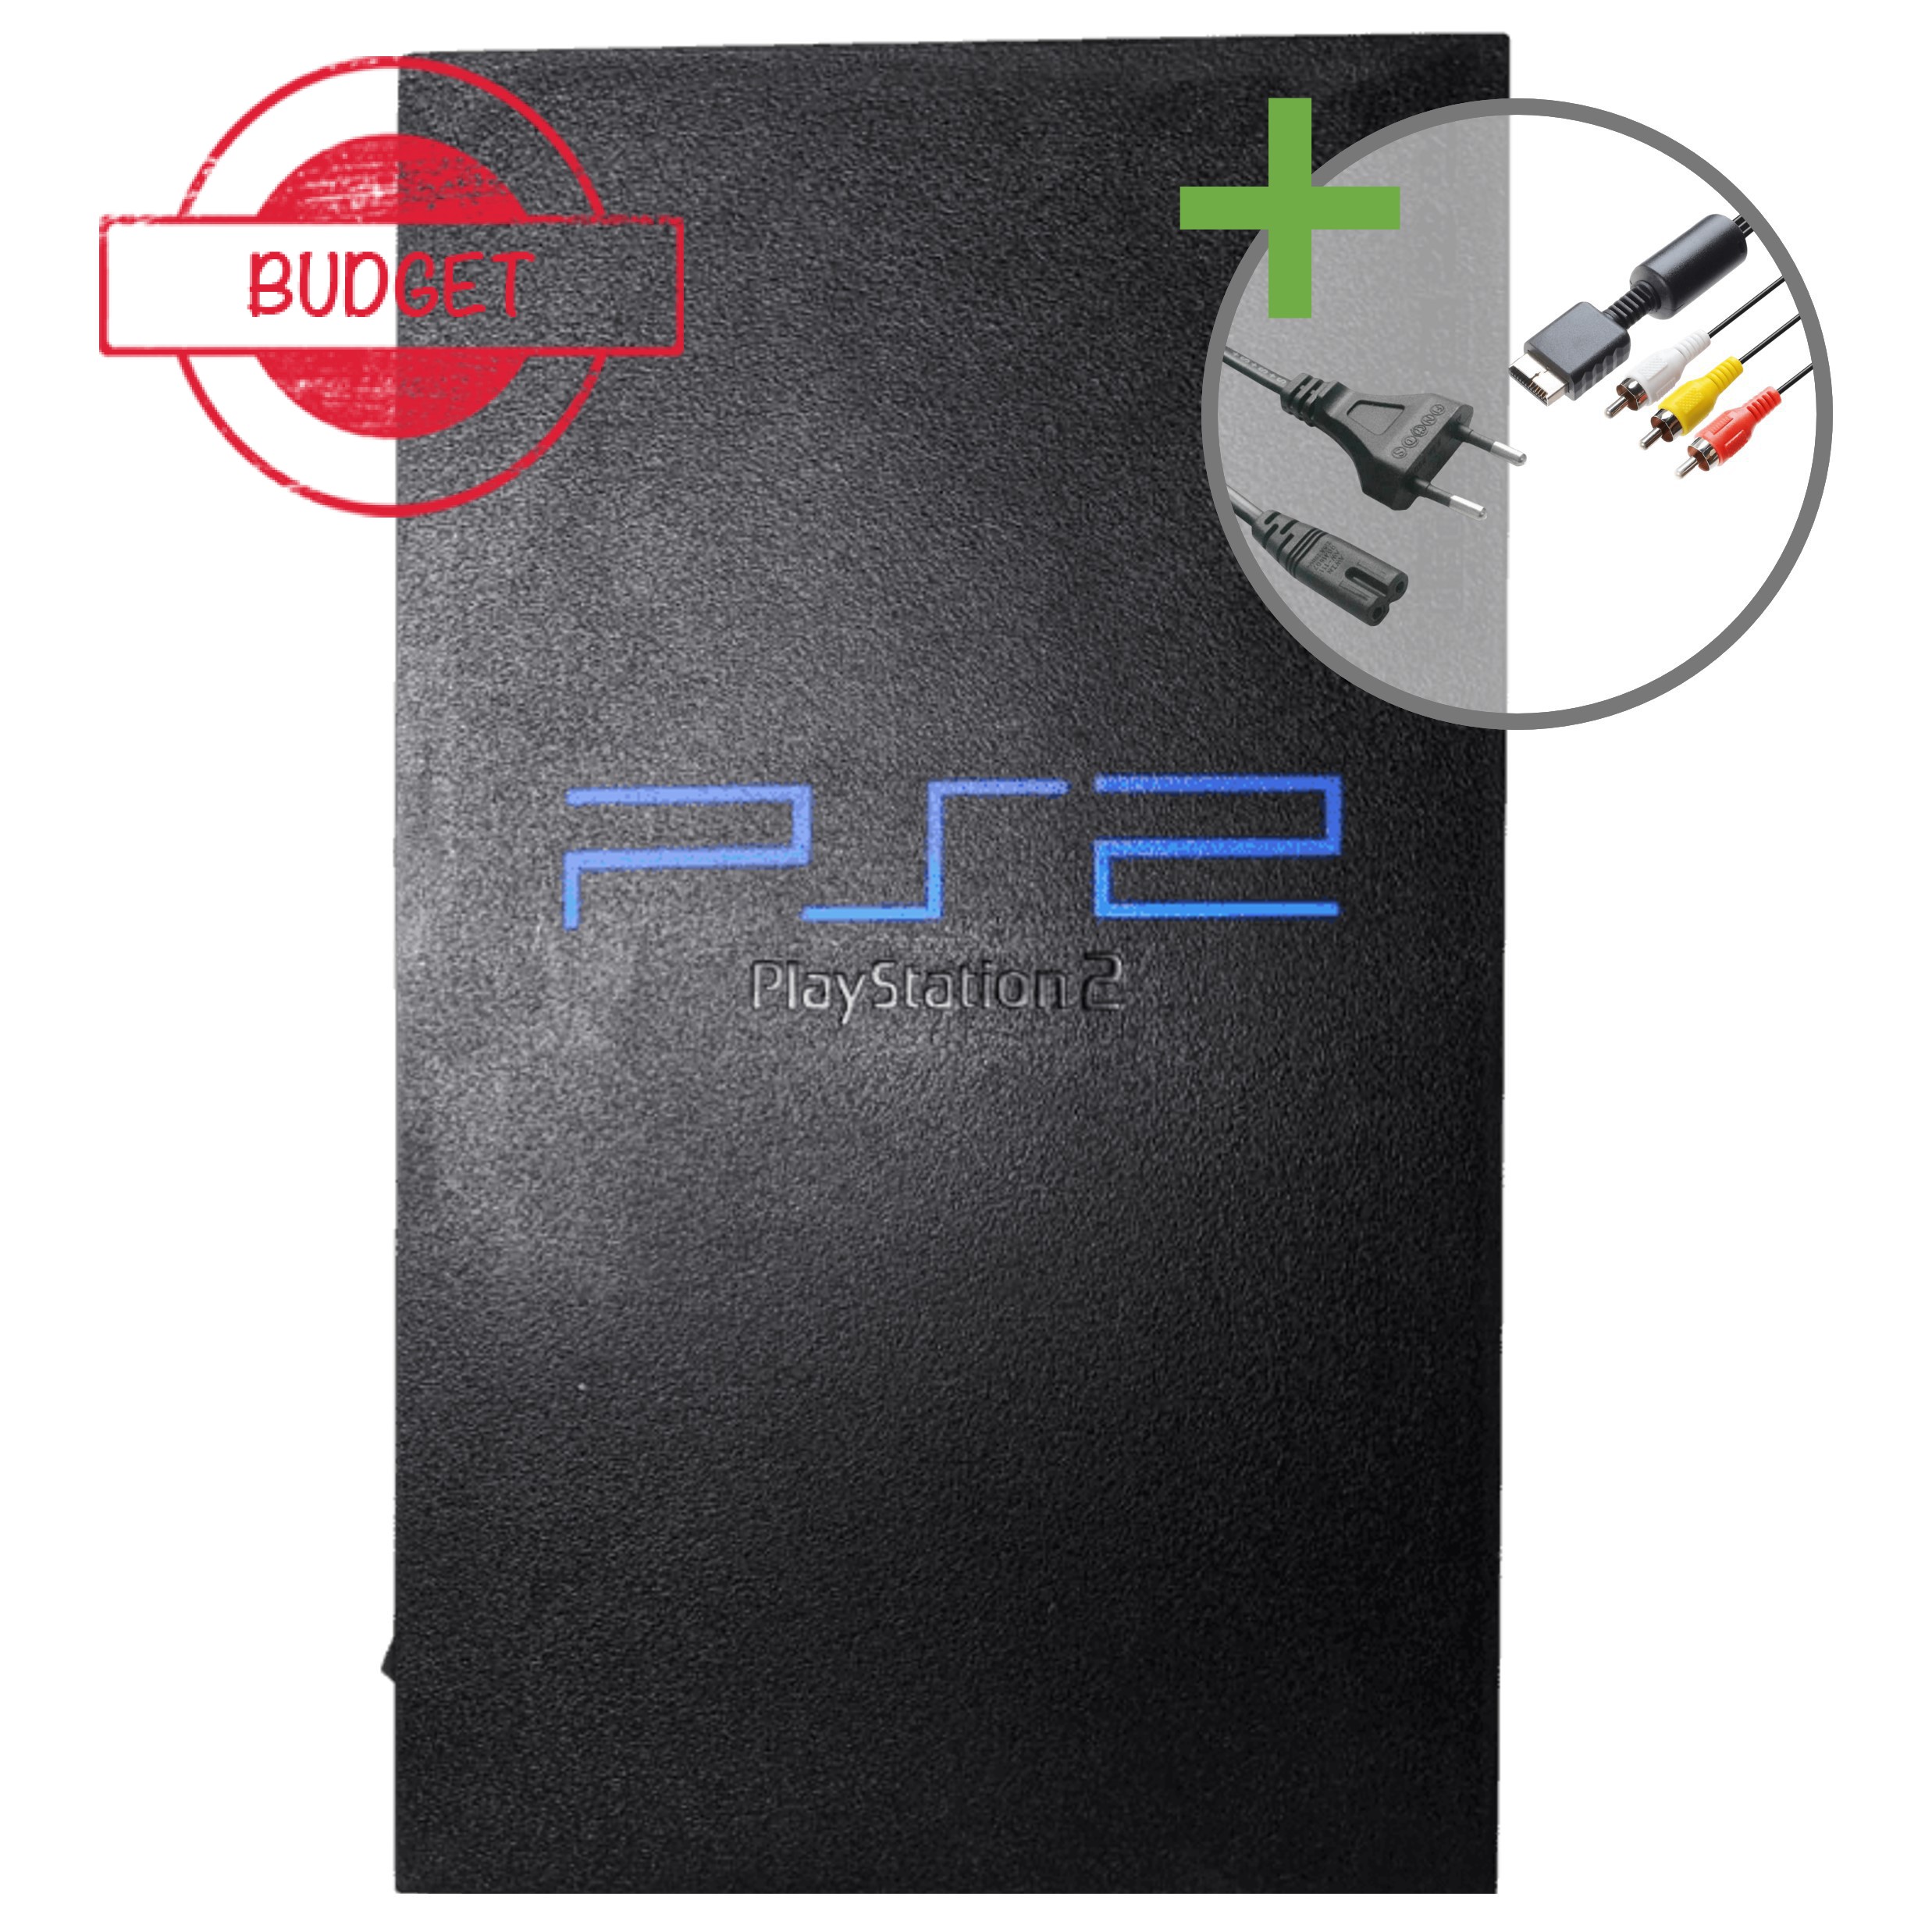 Sony PlayStation 2 Phat Starter Pack - Black Edition - Budget - Playstation 2 Hardware - 3